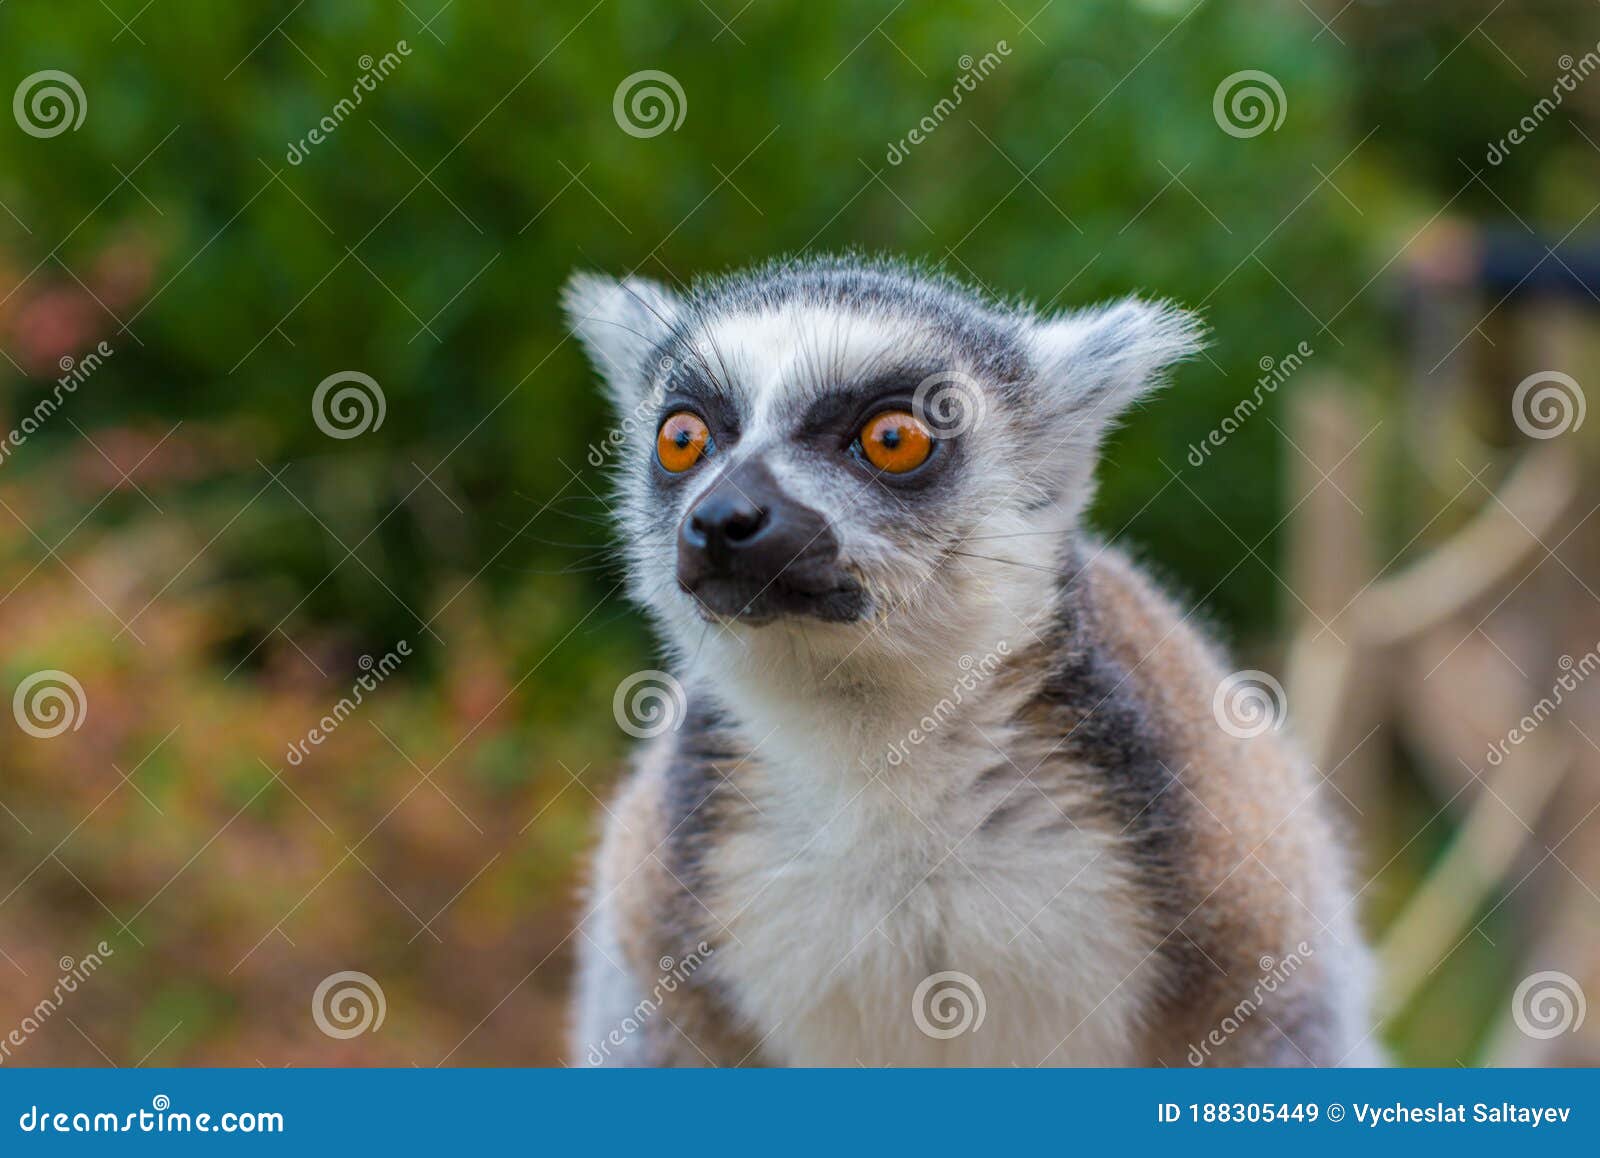 lemur head close up